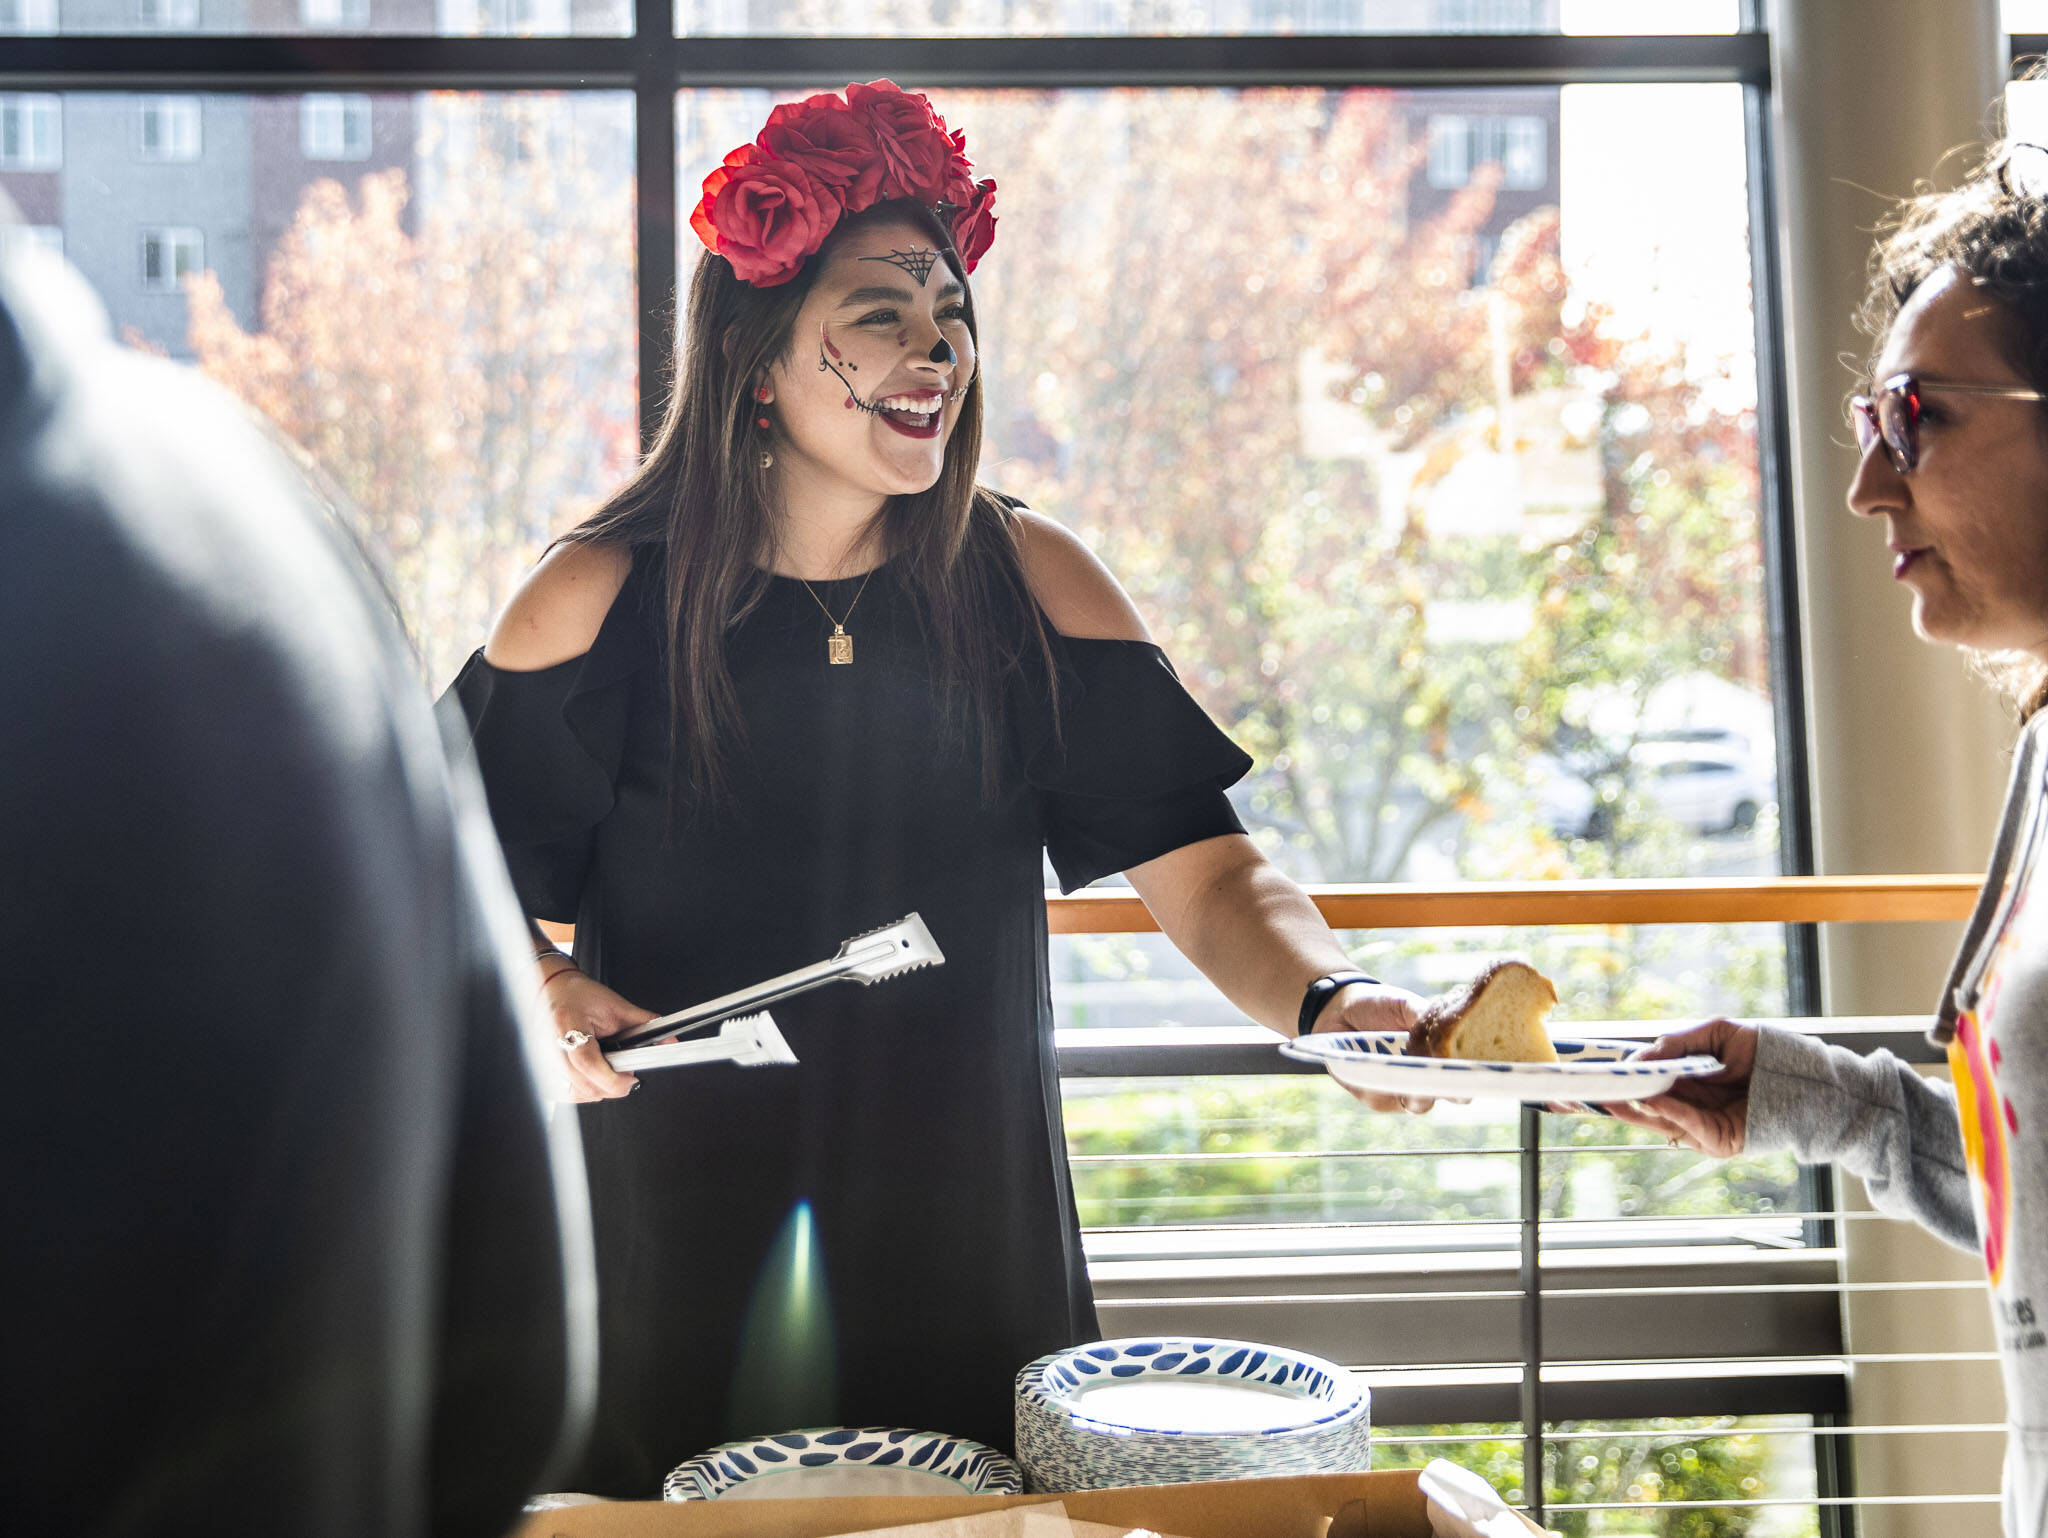 Daniela Altamirano-Crosby smiles while serving Pan de Muertos at the Washington-Guerrero Foundation’s Día de los Muertos event at the Lynnwood Convention Center on Saturday, in Lynnwood. (Olivia Vanni / The Herald)